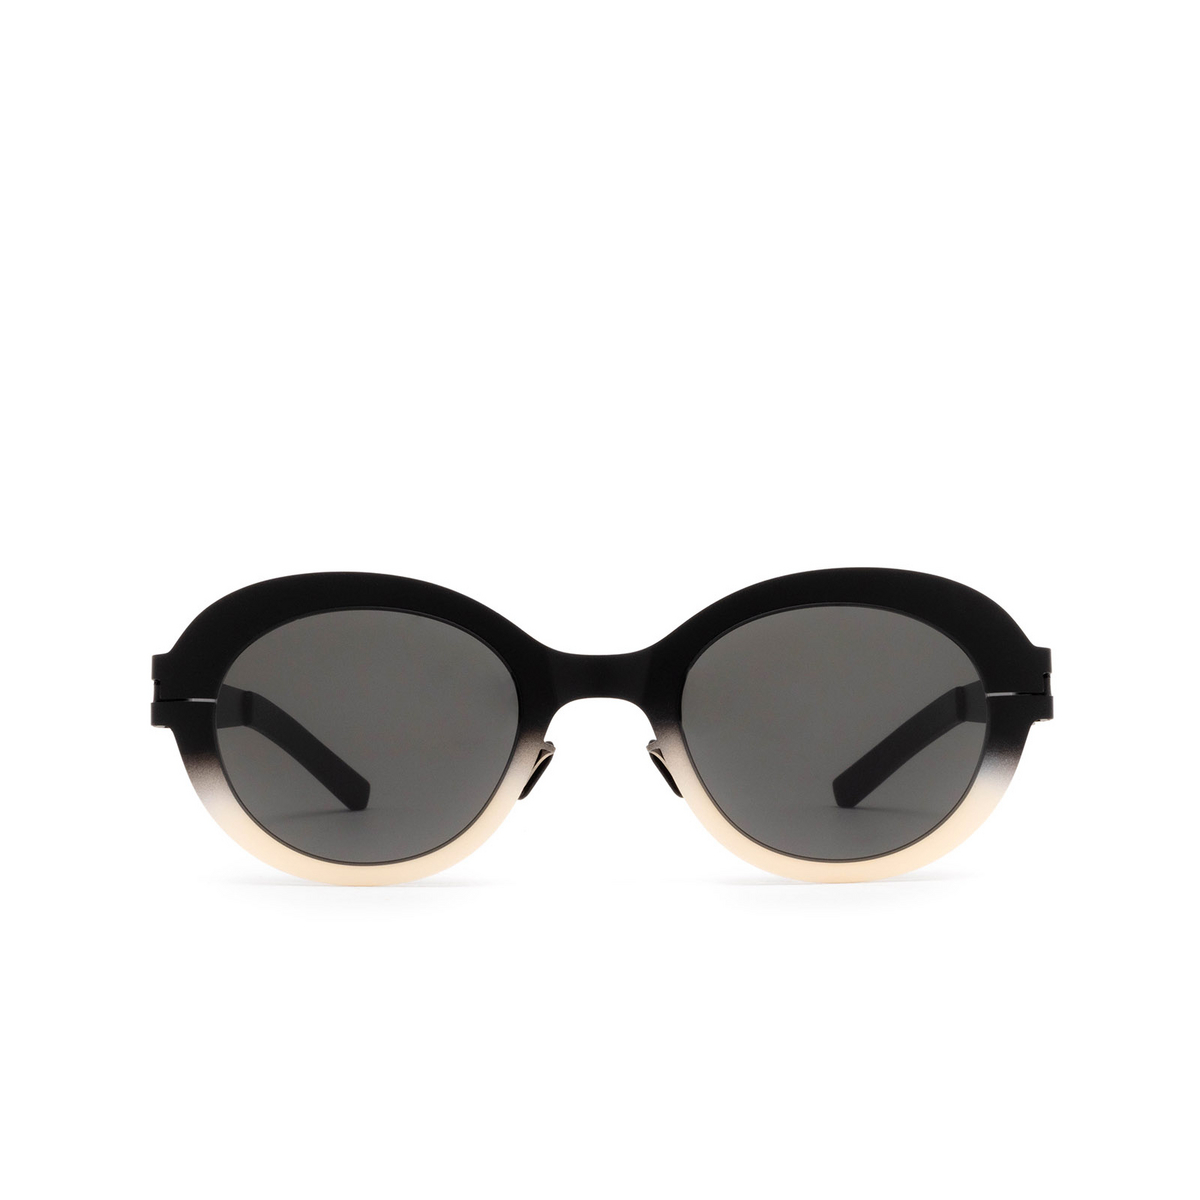 Mykita FOCUS Sunglasses 476 Black/Chantilly White - front view